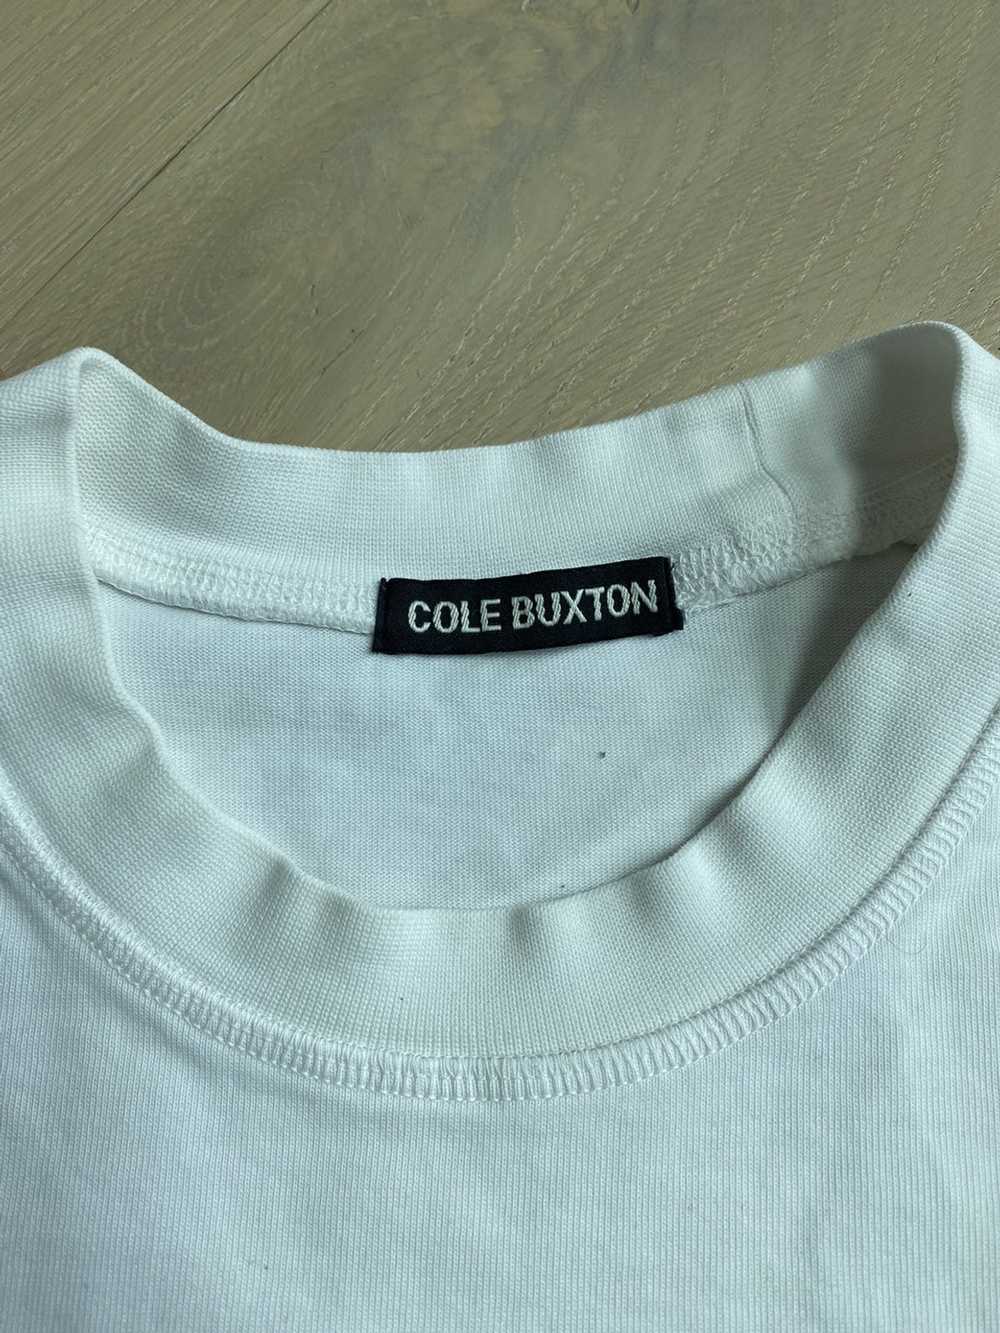 Cole Buxton Cole Buxton Off white warm up t-shirt - image 2